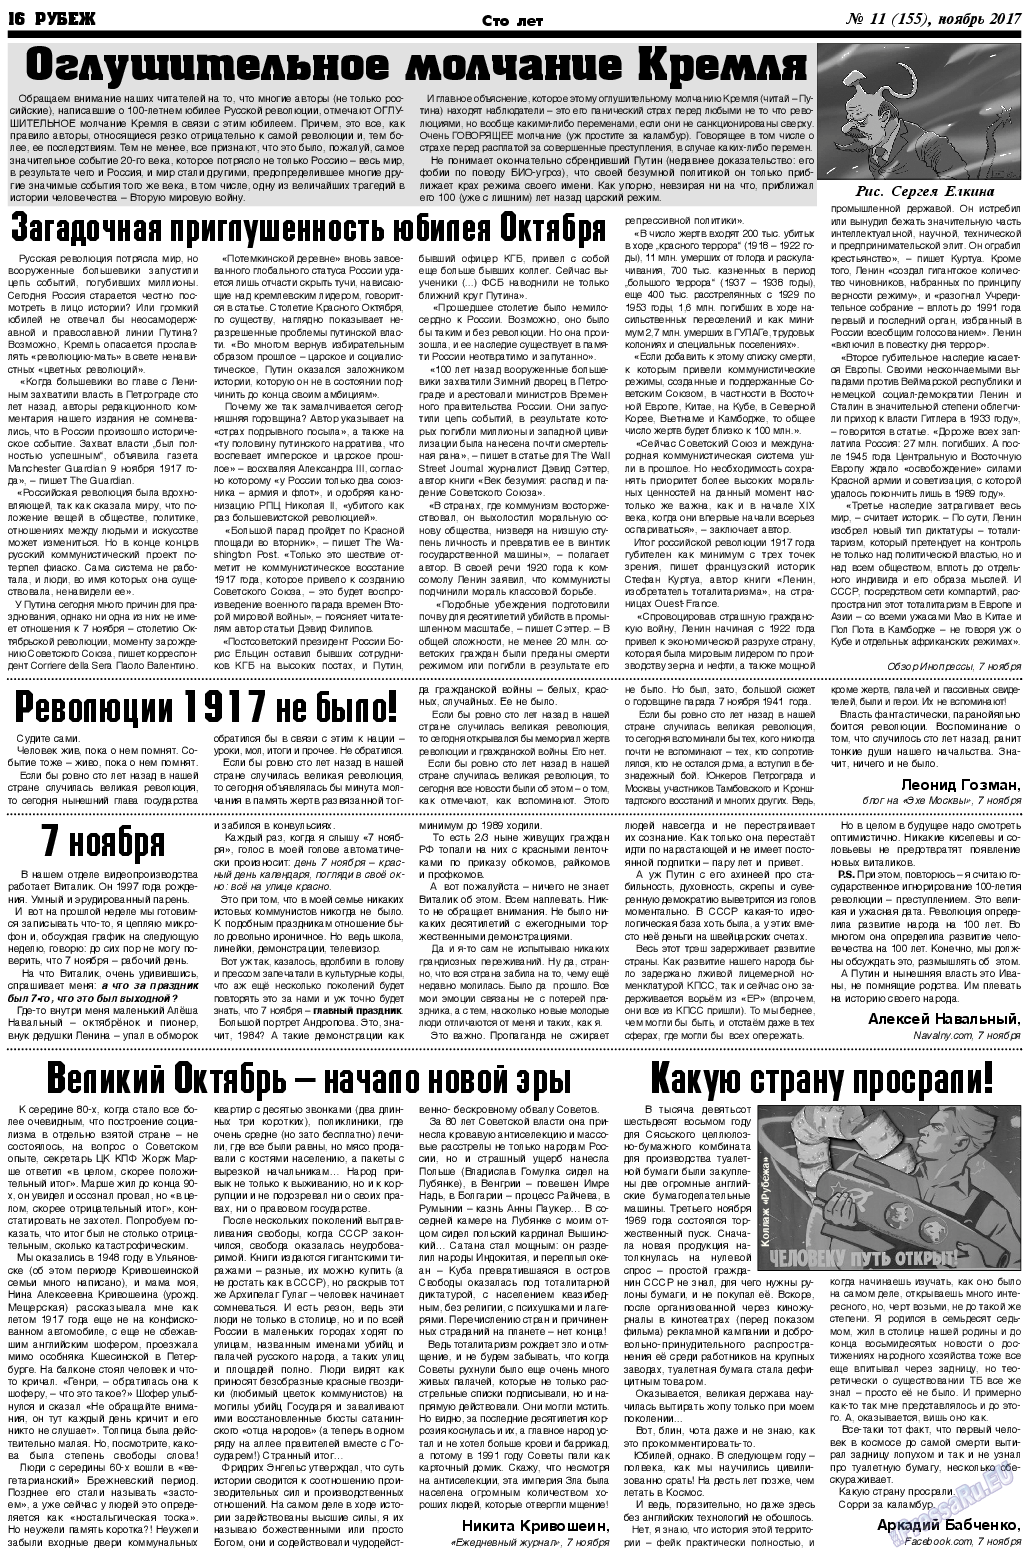 Рубеж, газета. 2017 №11 стр.16